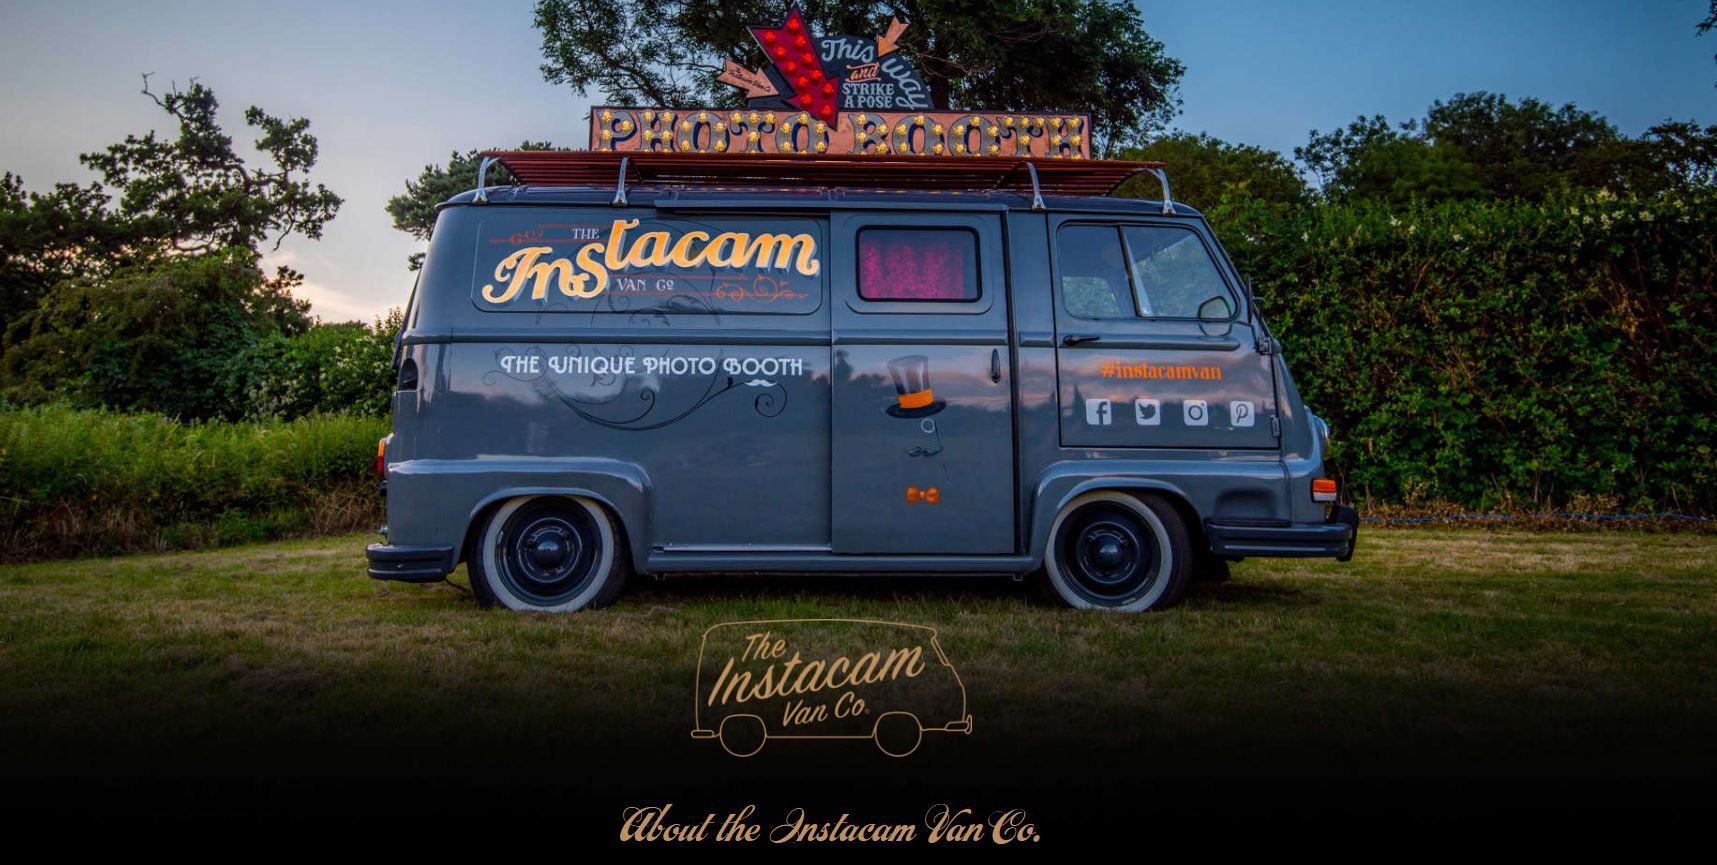 Instavancam co vintage photobooth van hire weddings party and corprate events